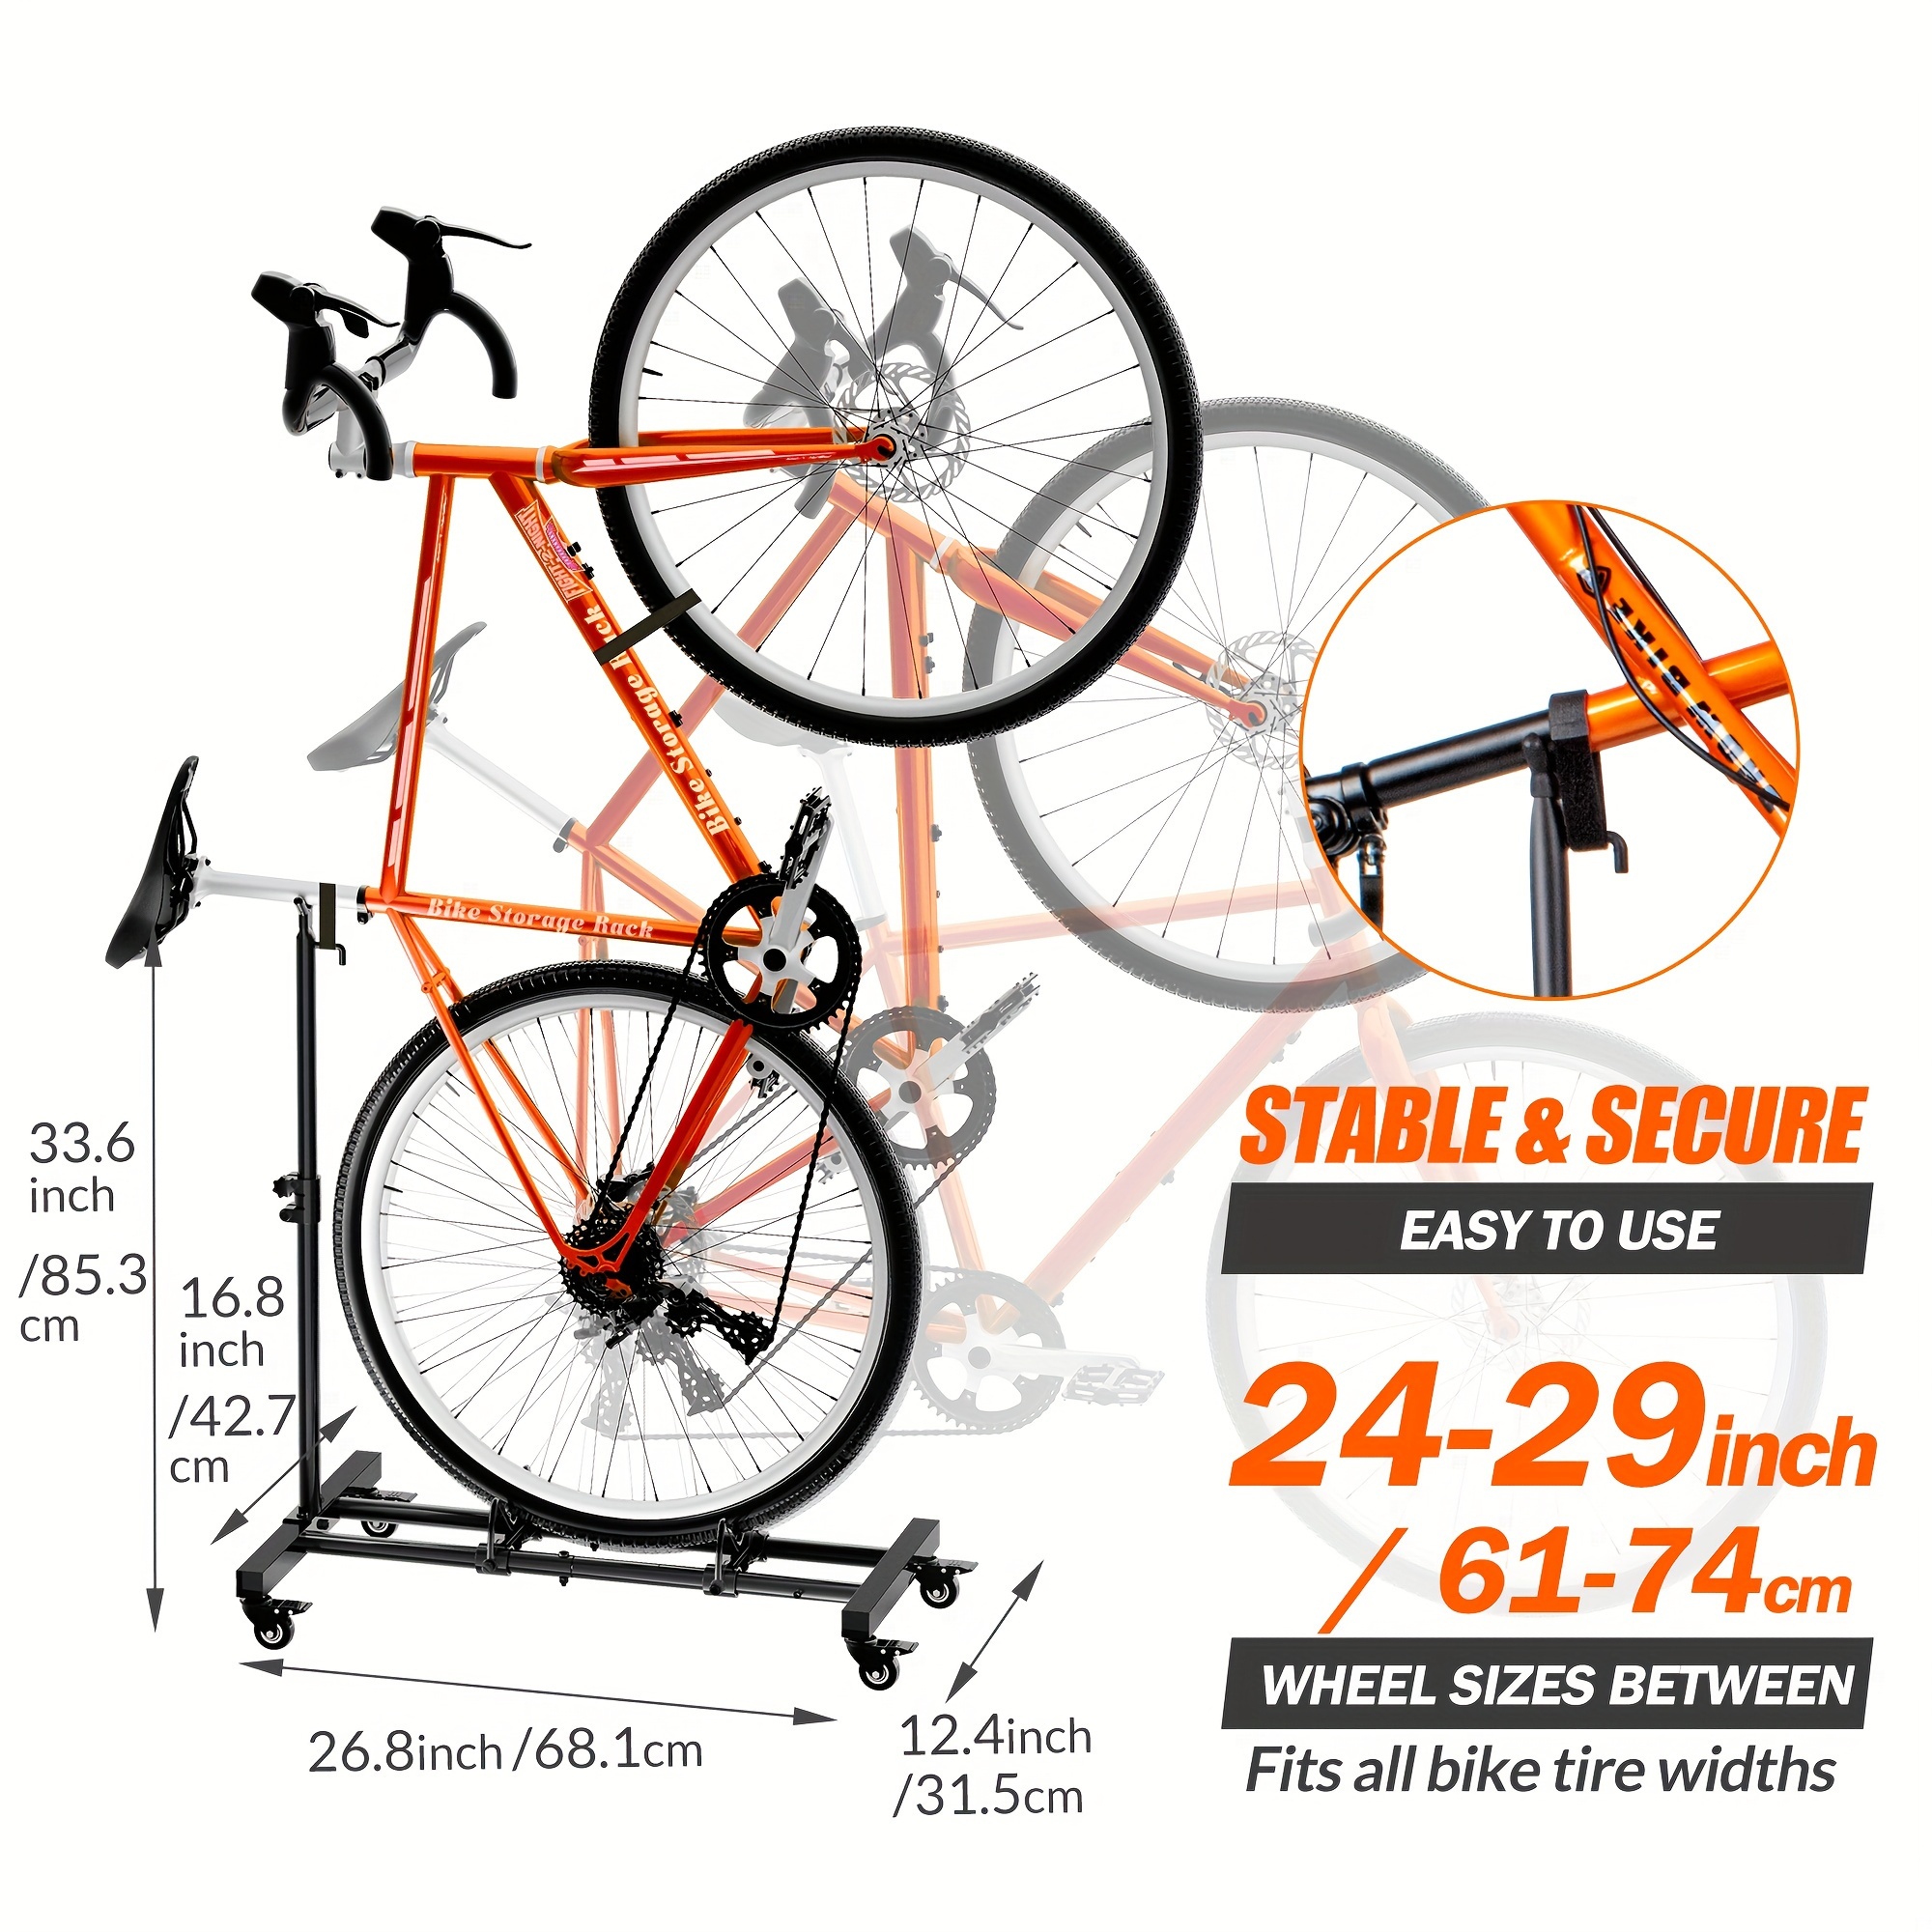 Soporte vertical de acero para bicicletas, estante para bicicletas